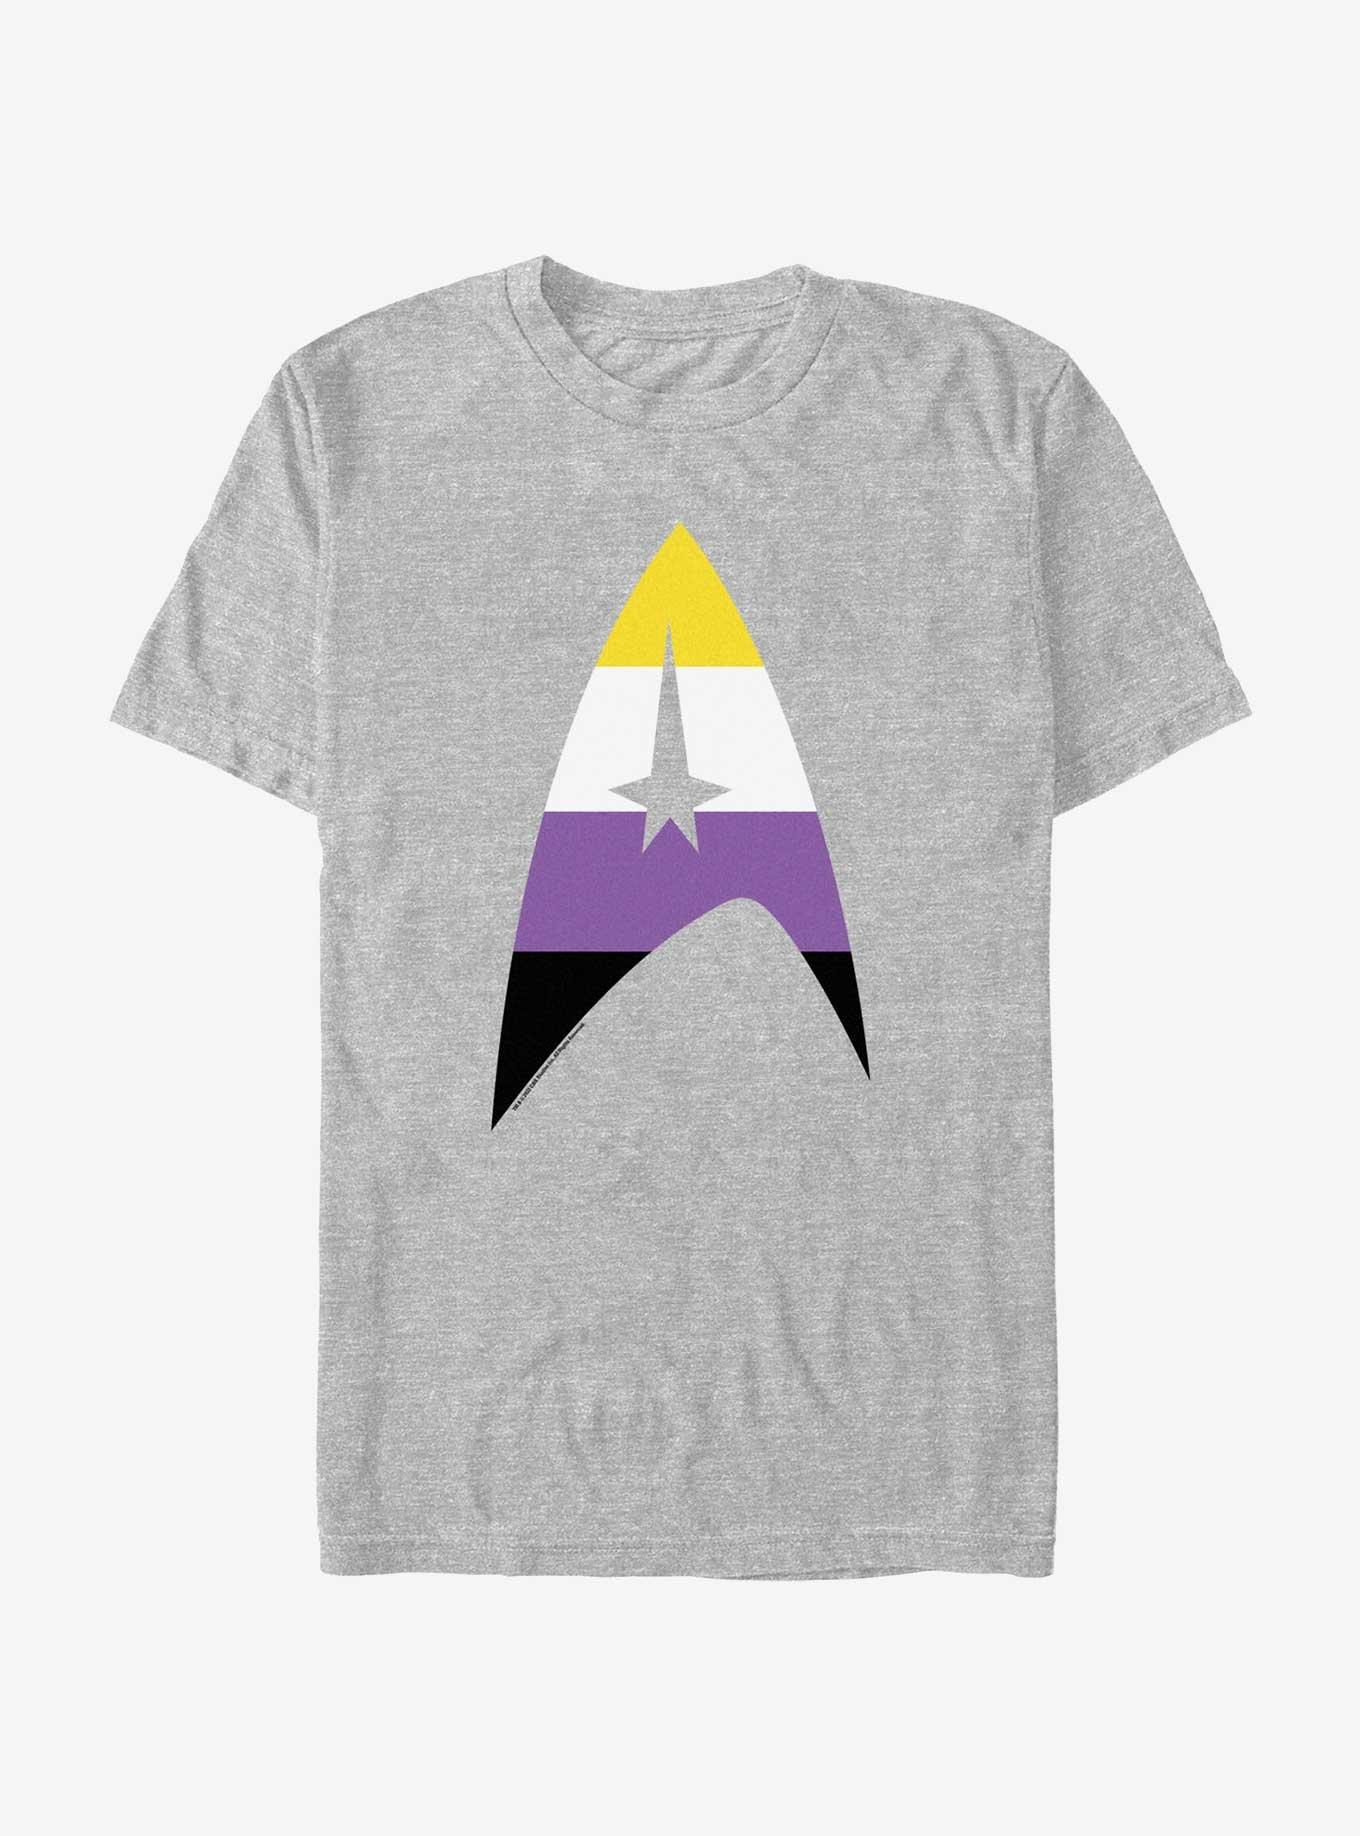 Star Trek Nonbinary Flag Logo Pride T-Shirt